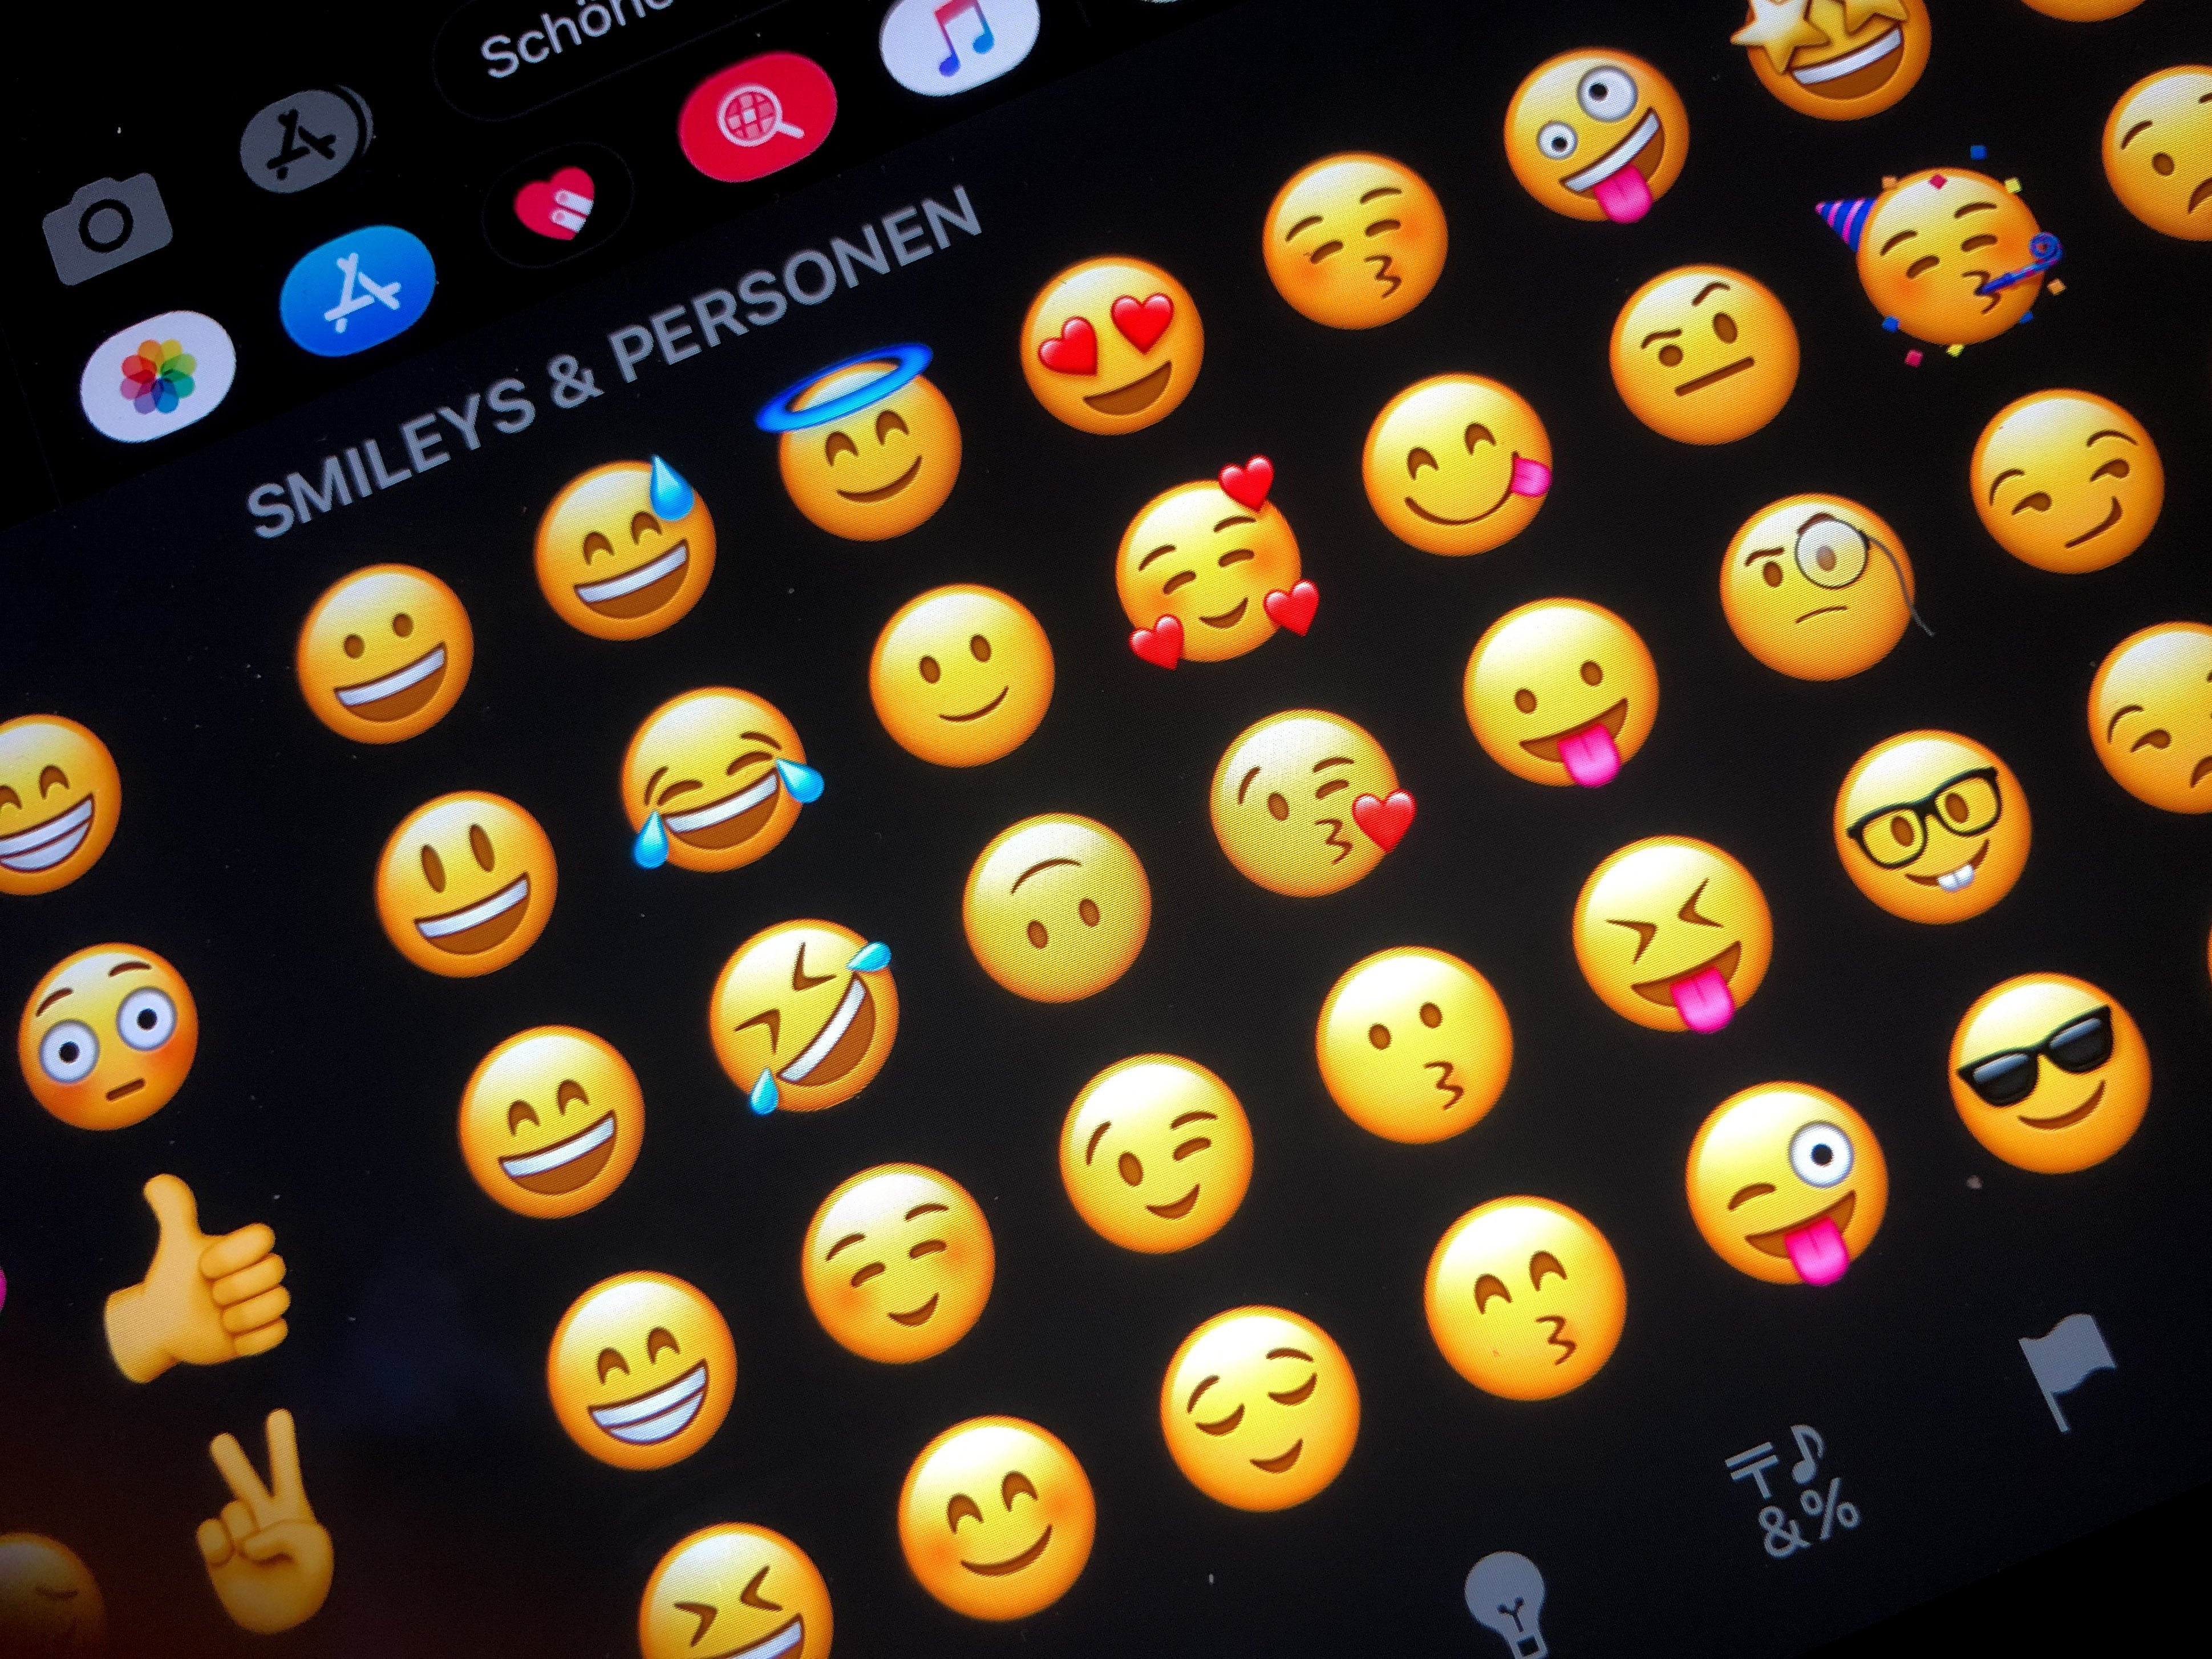 A screen showing various iOS emoji